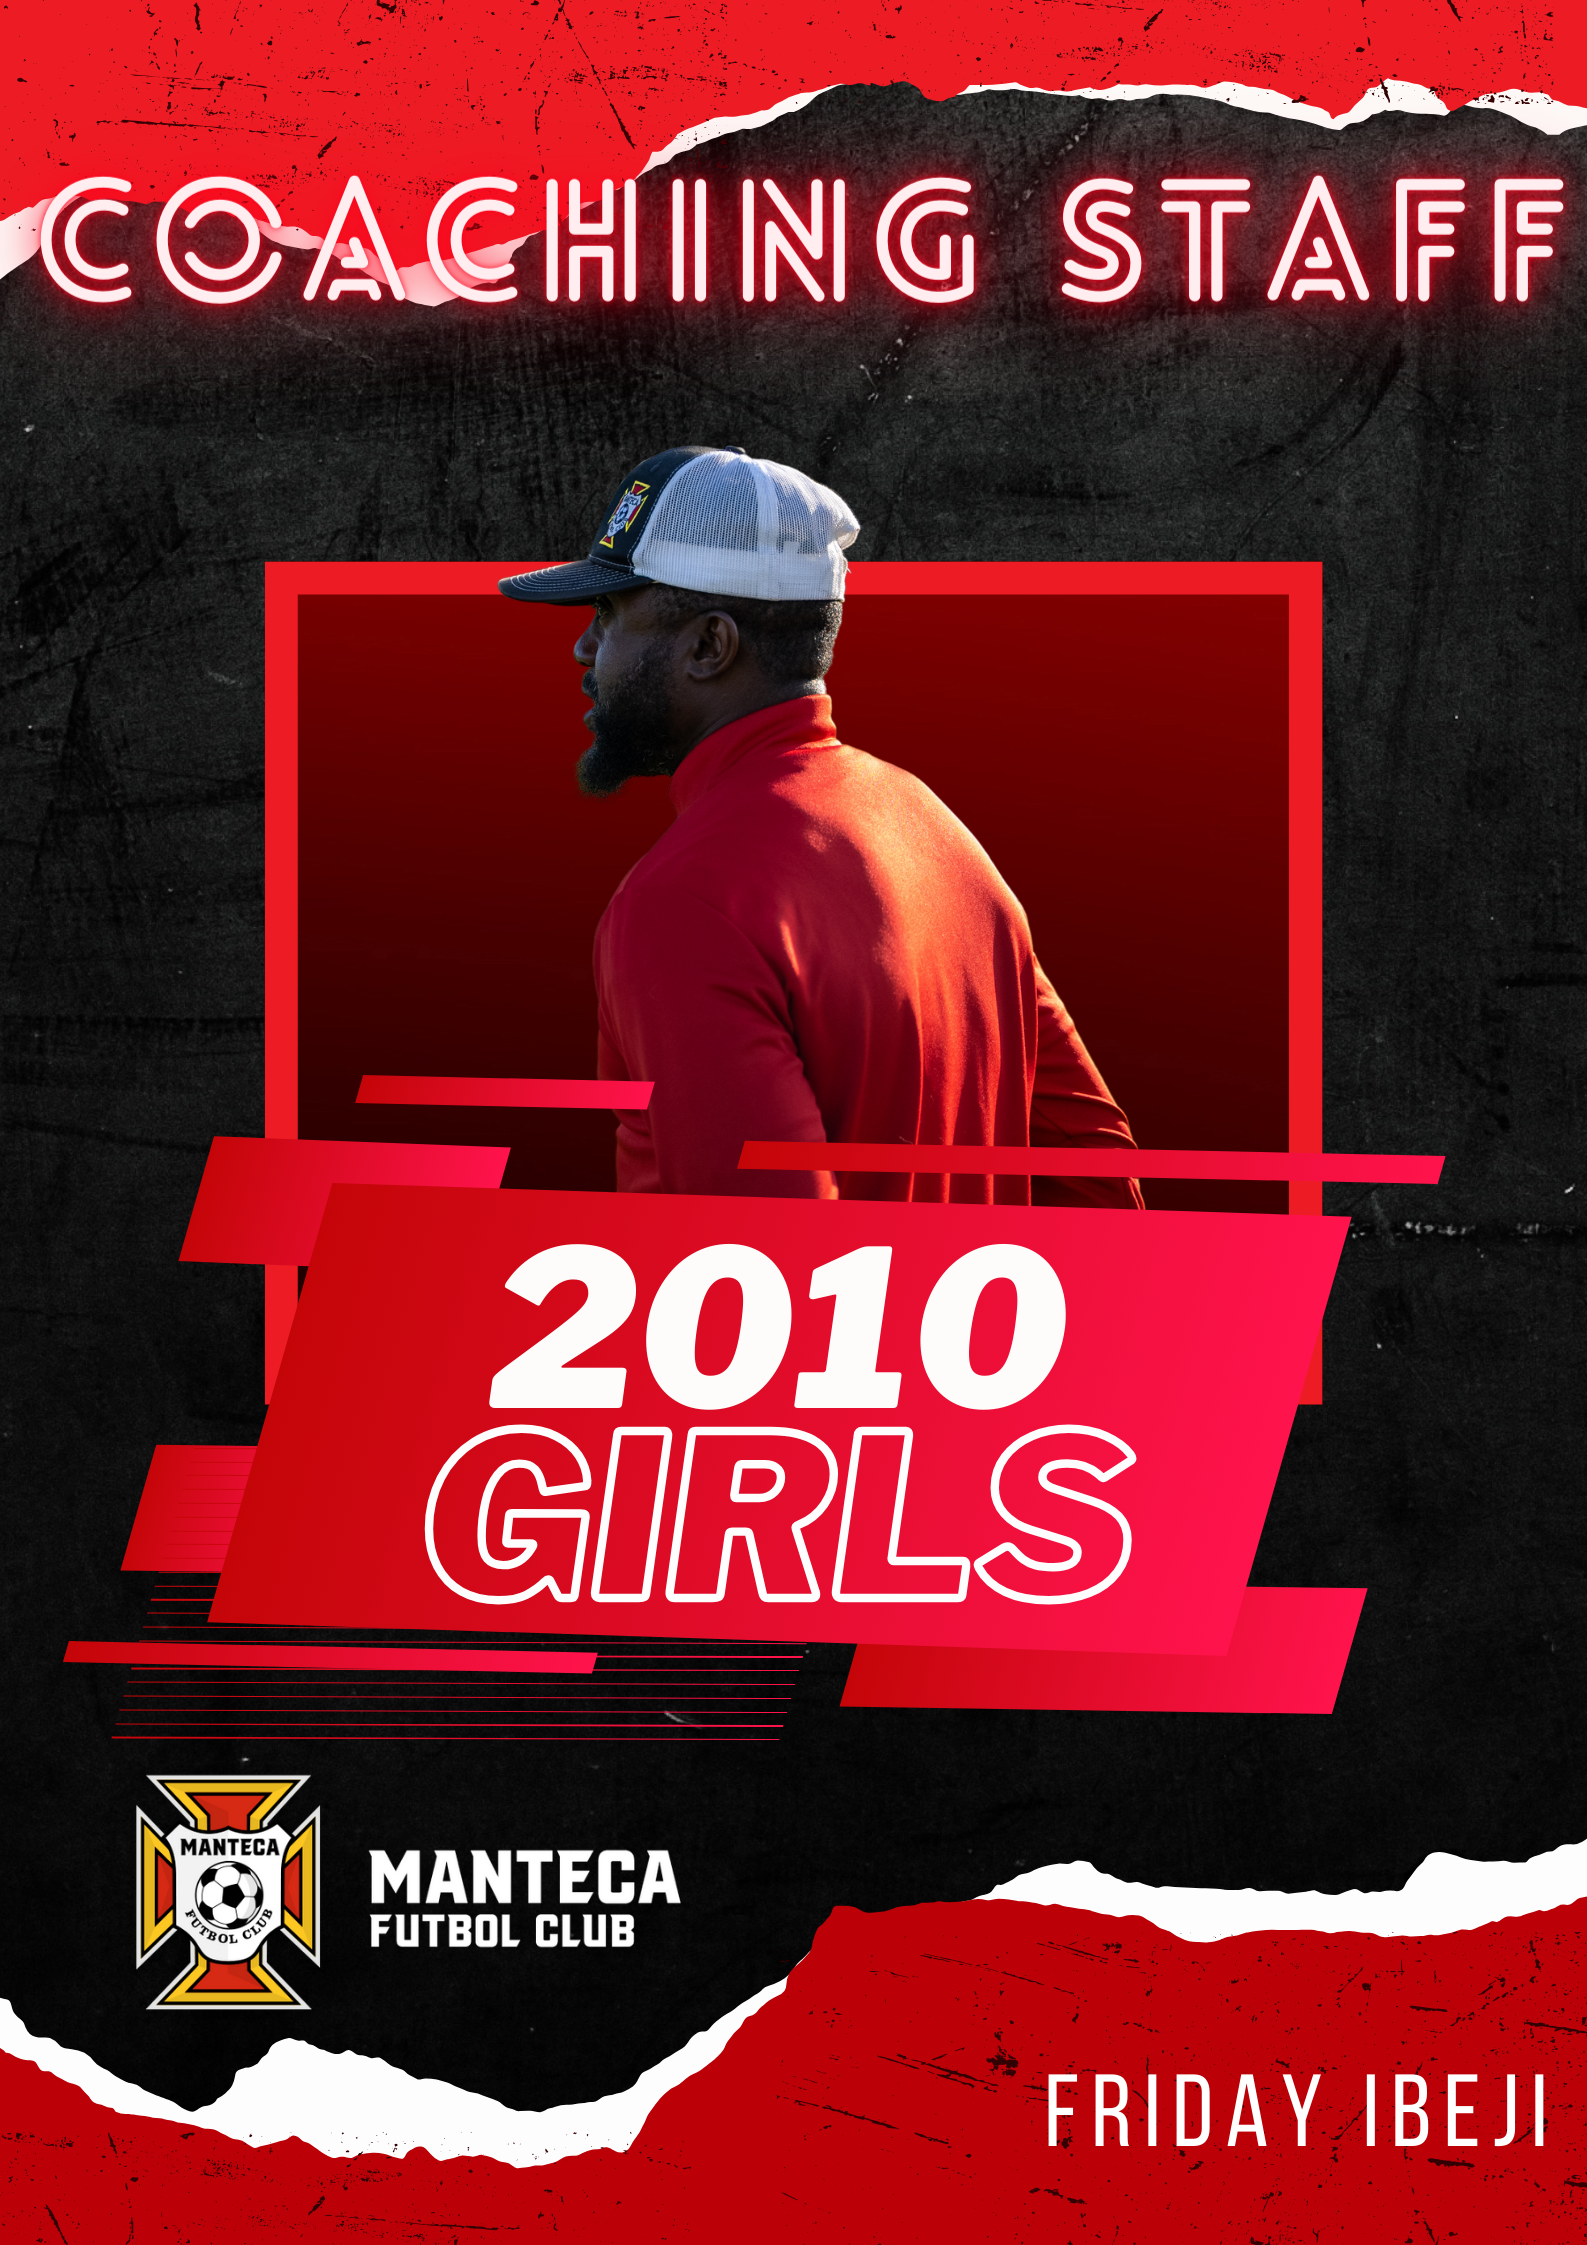 Manteca Futbol Club 10 Girls 